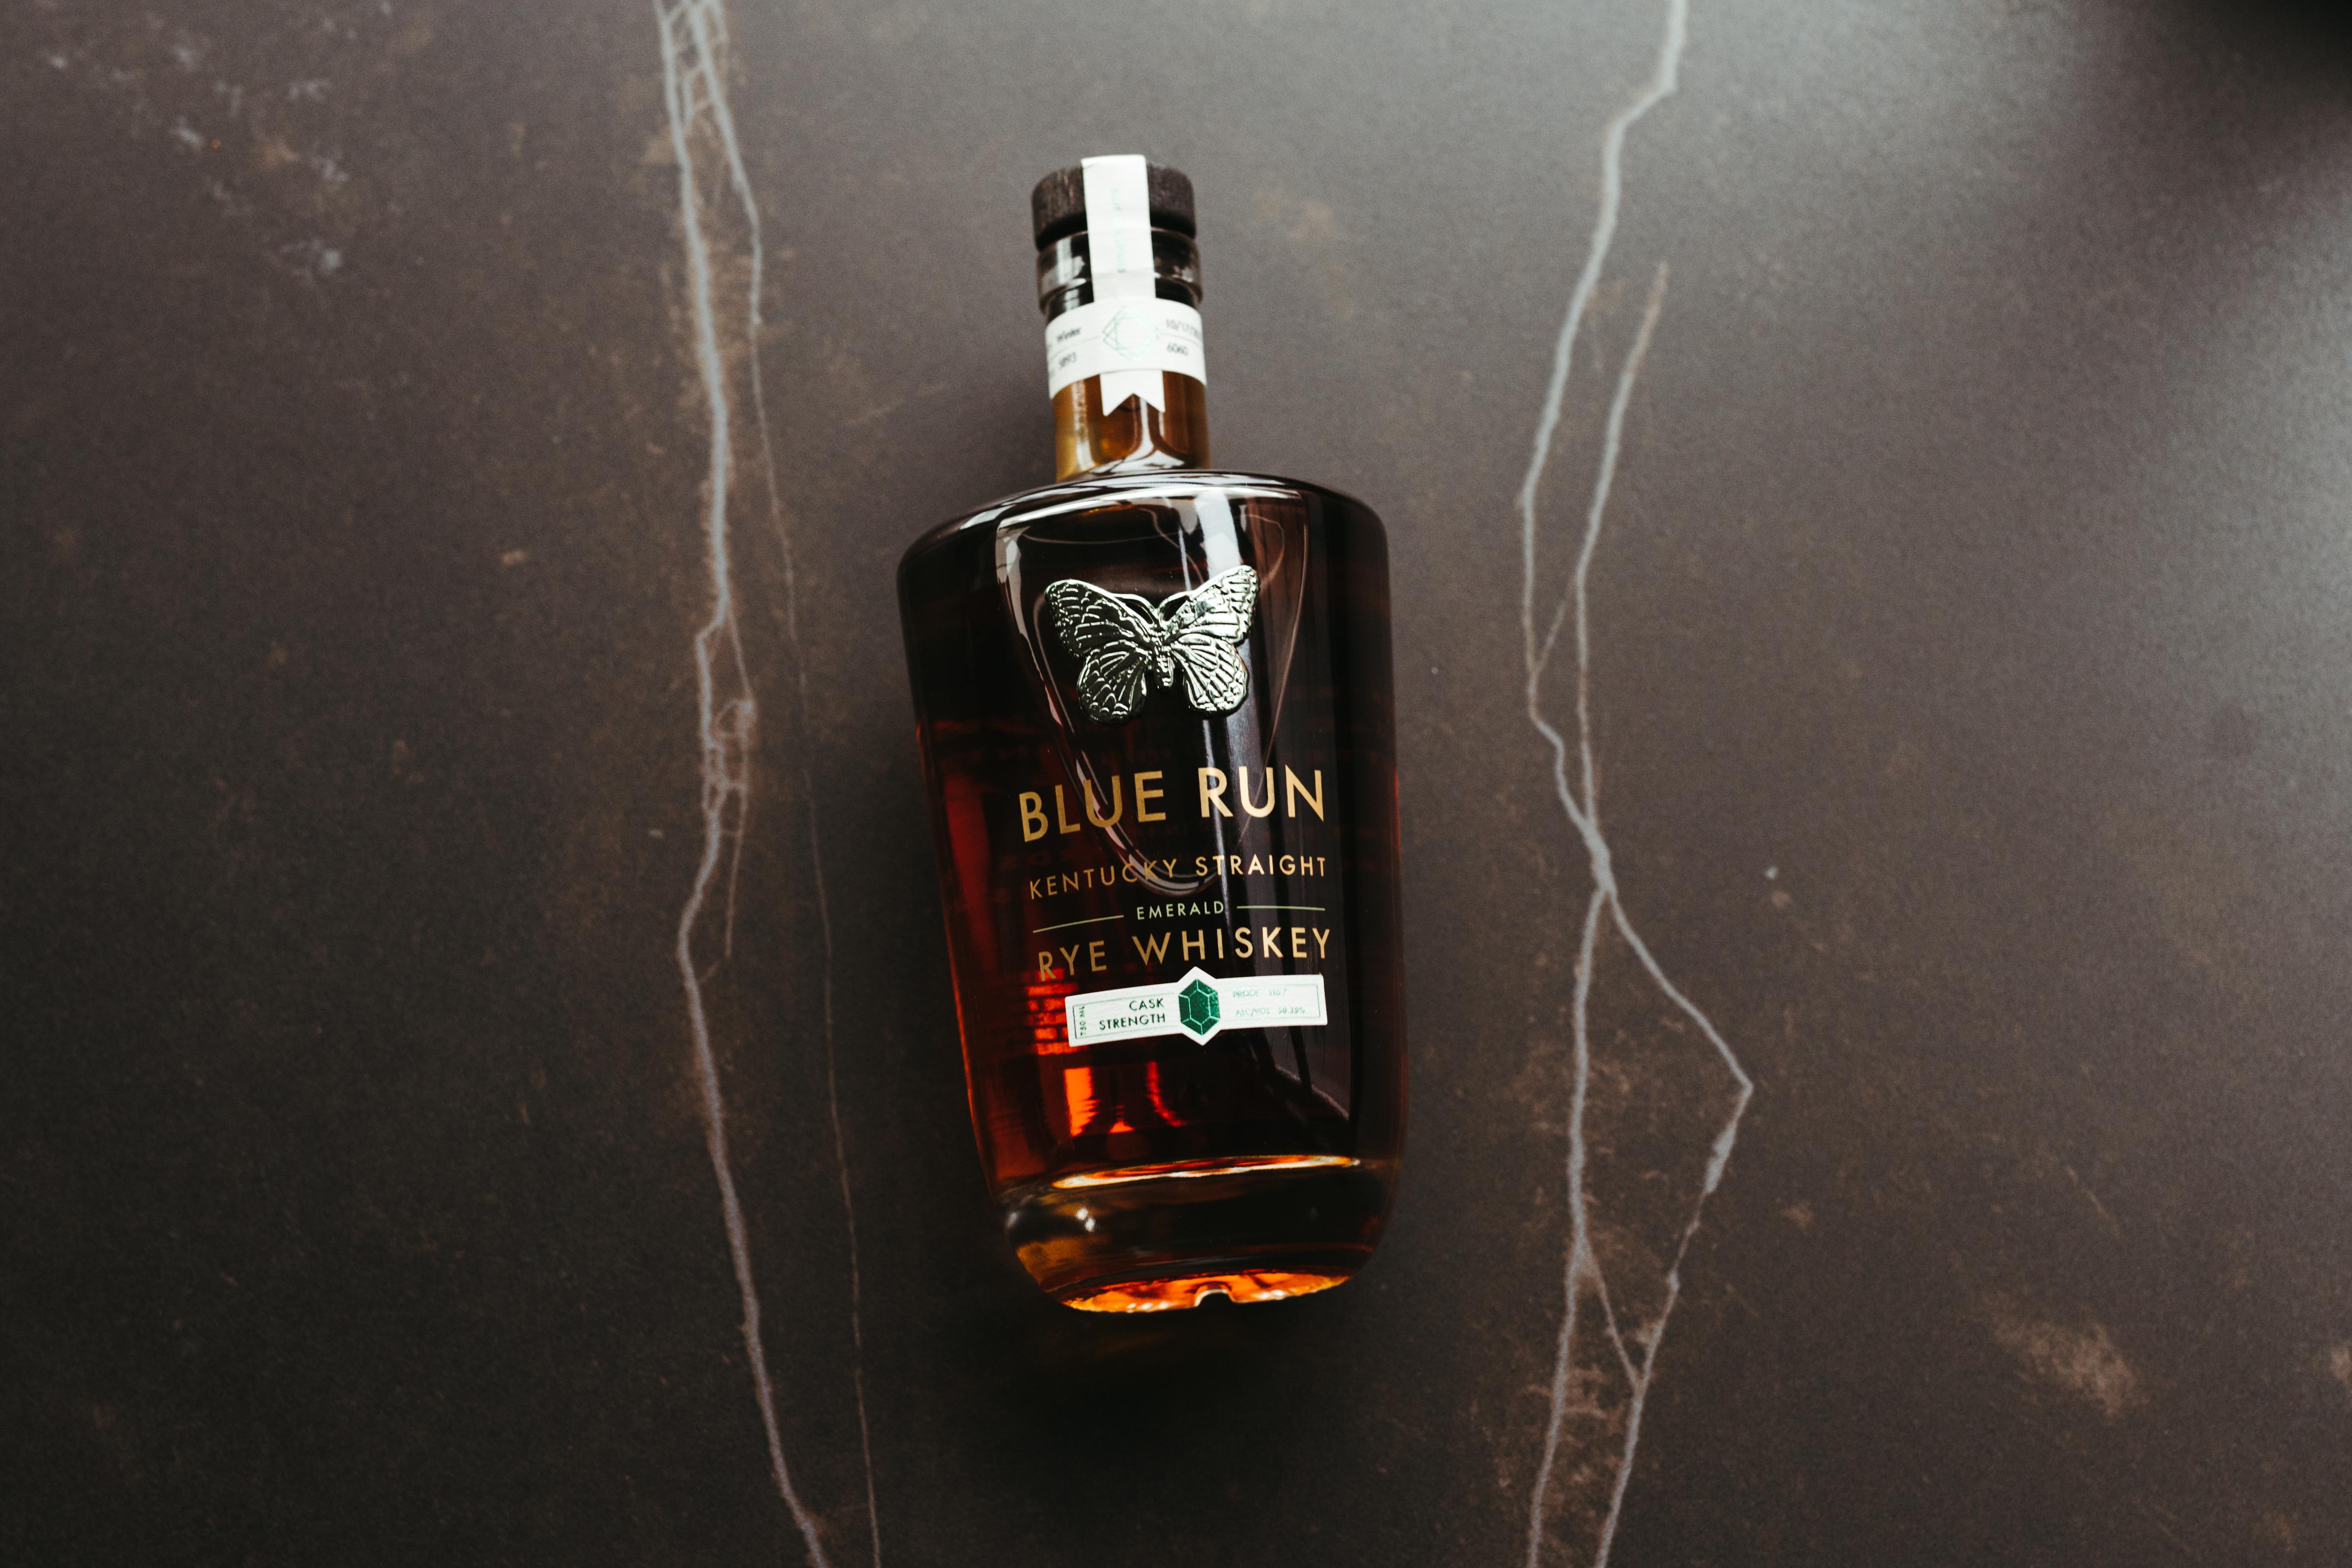 Blue Run Spirits Expands Rye Whiskey Portfolio with Release of Emerald Rye